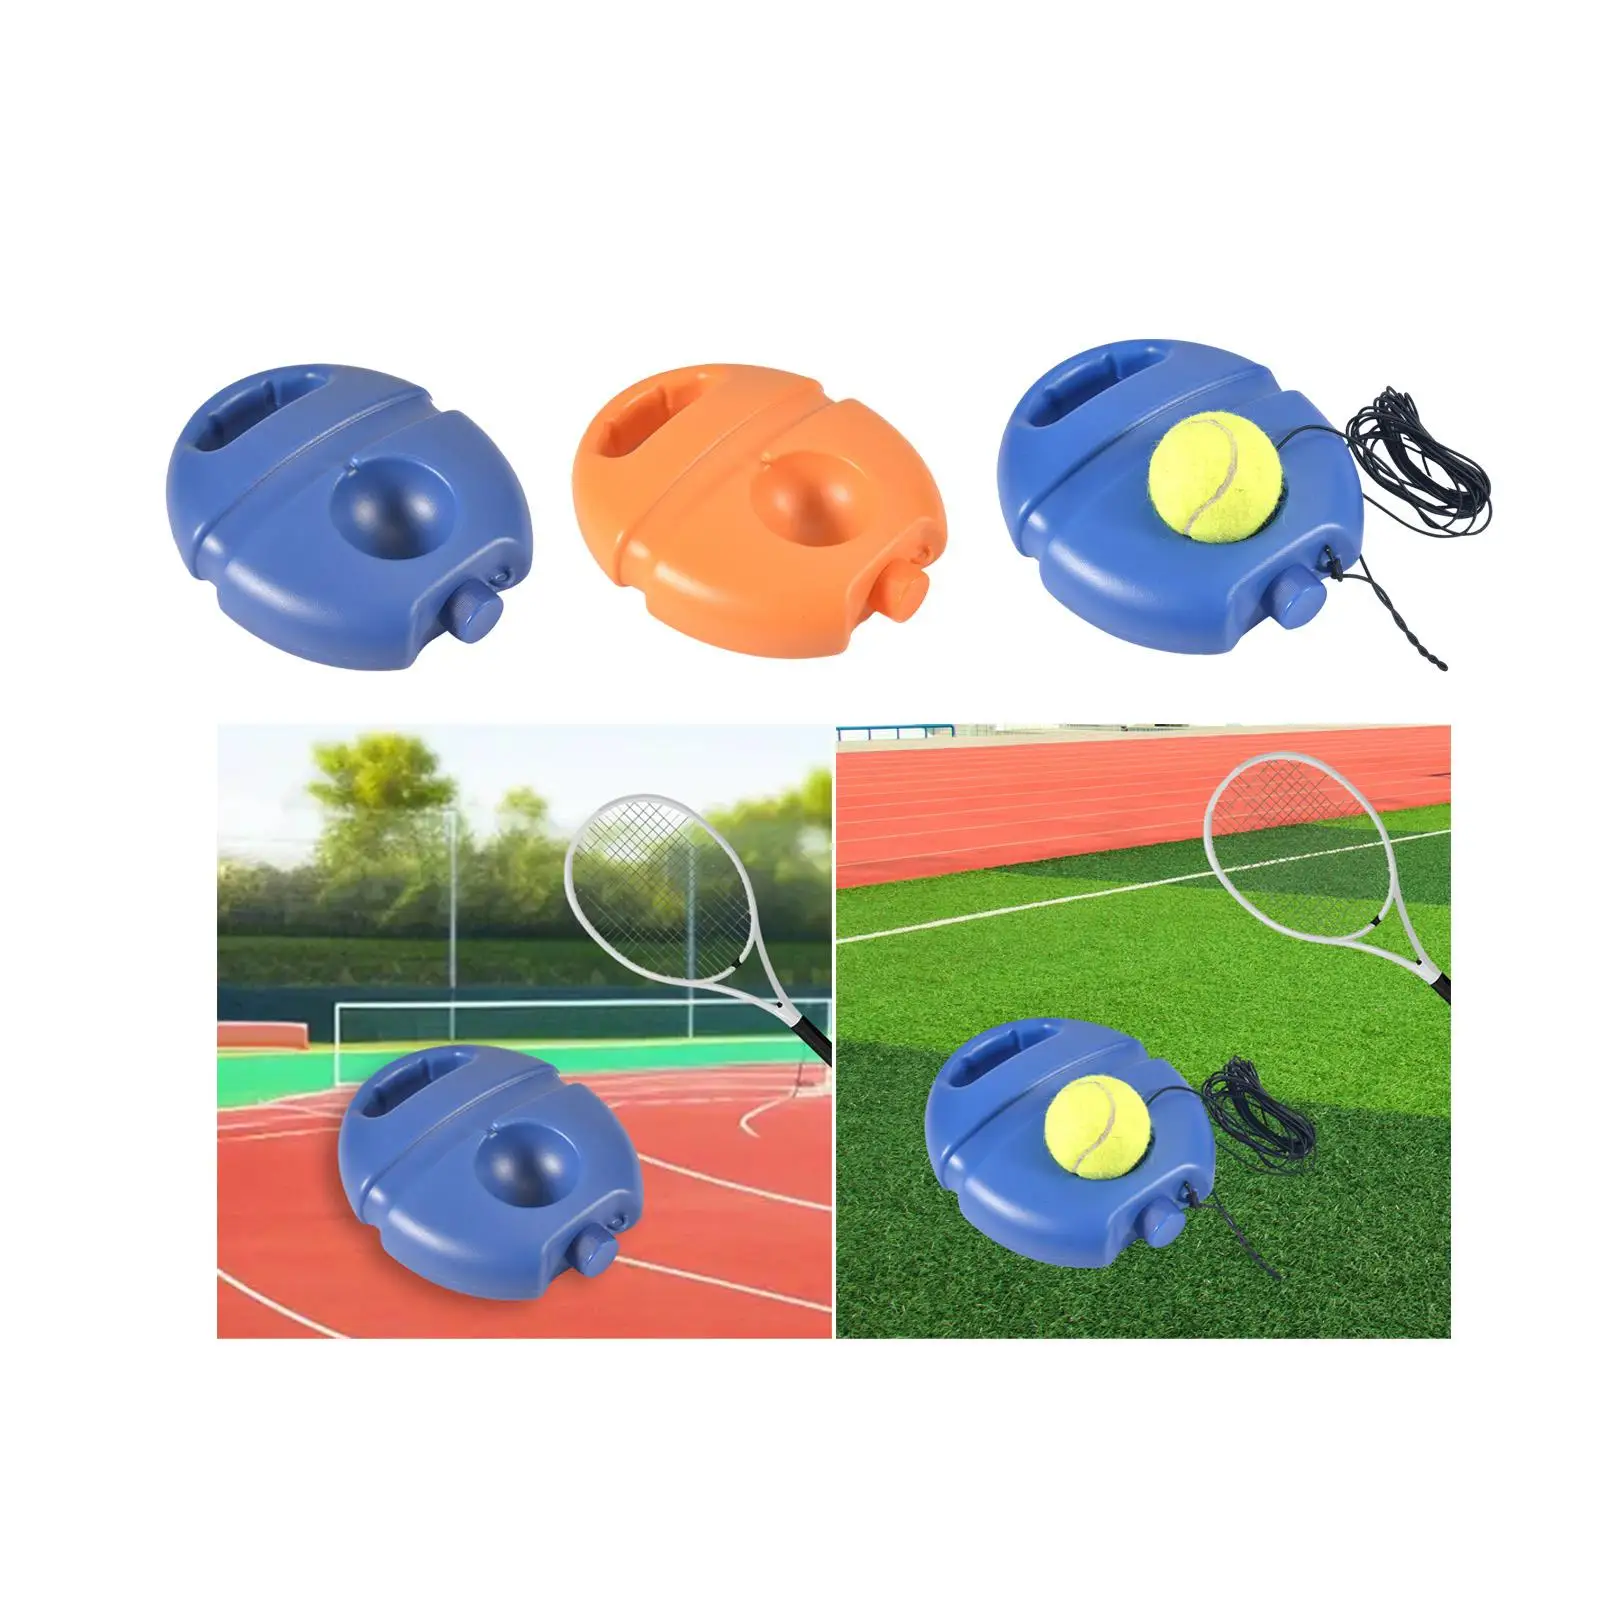 Tennis Trainer Base, Tennis Practice Device, Tennis Training Aid, Solo Tennis